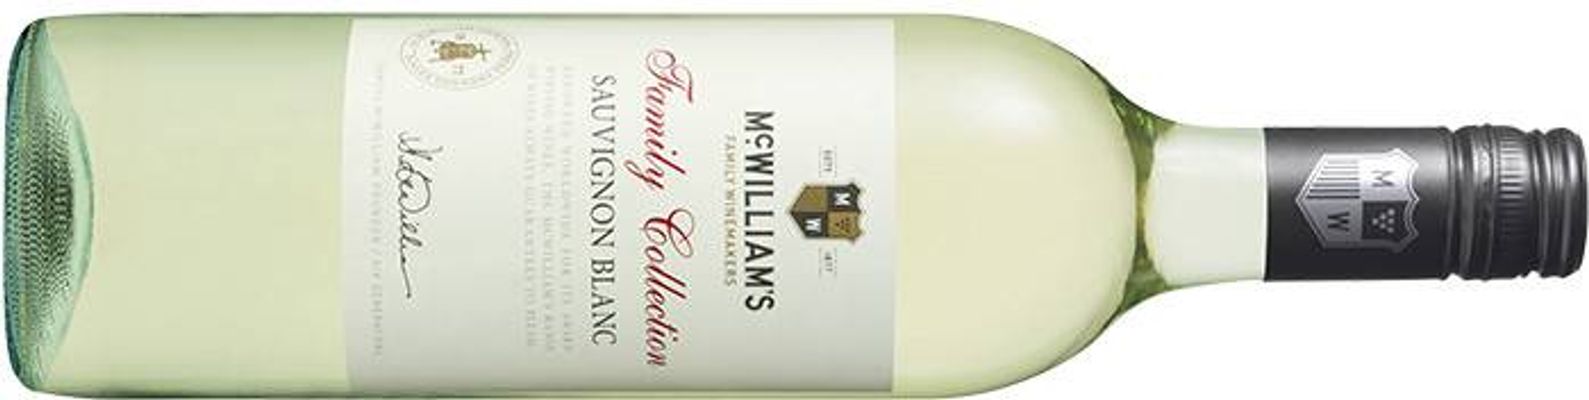 Mcwilliams Family Collection Sauvignon Blanc (12 Bottles)